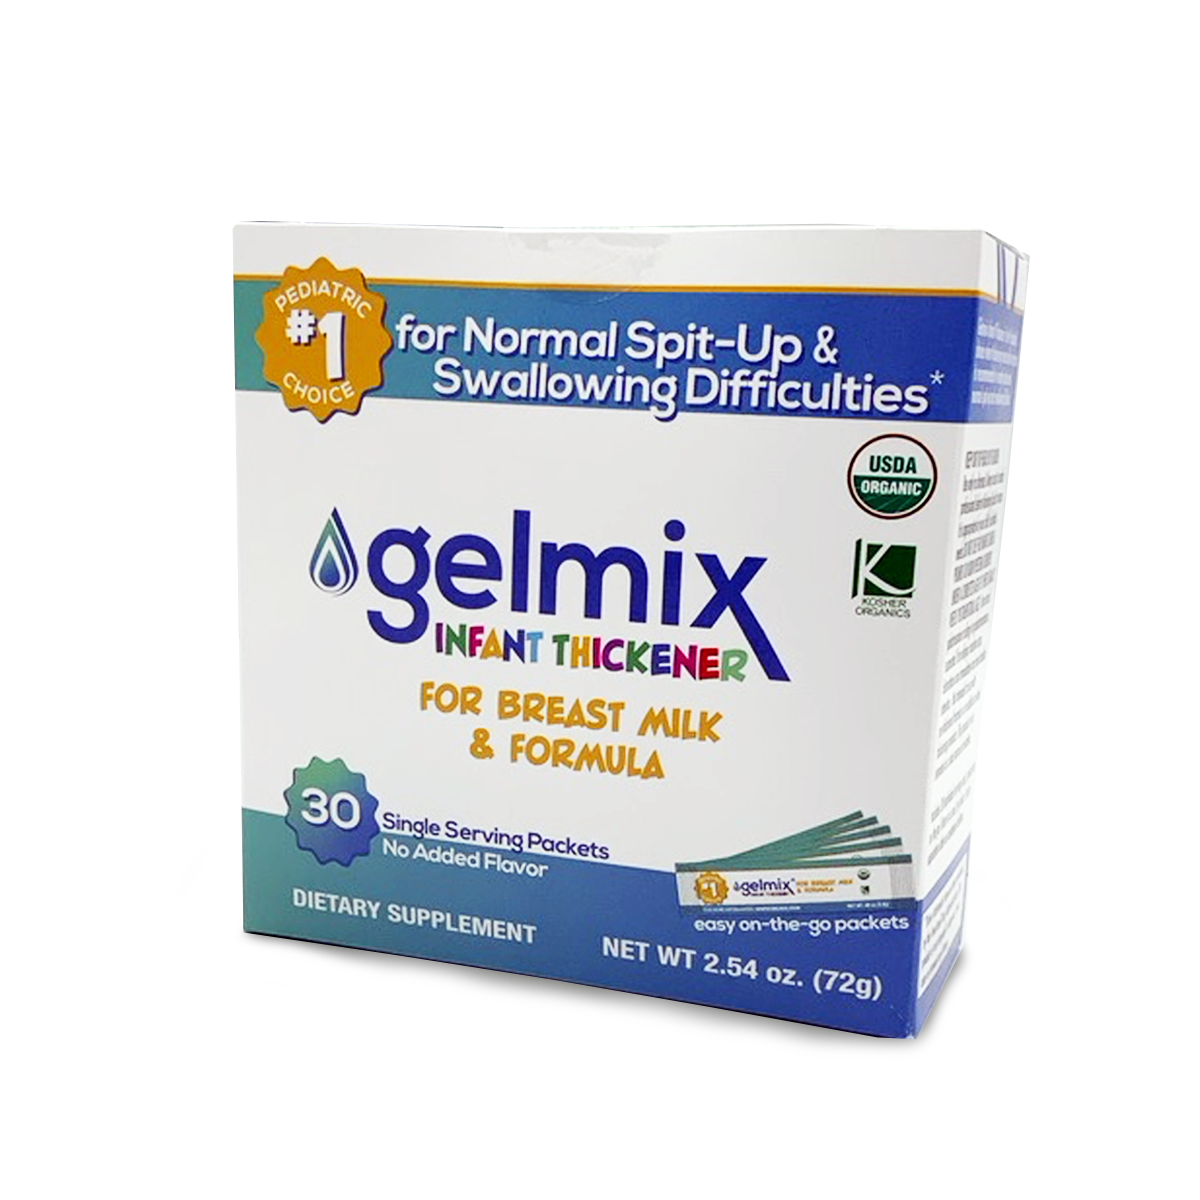 Gelmix Infant Thickener 2.4g Sticks Box of 30, USDA Organic, Pediatric Formula